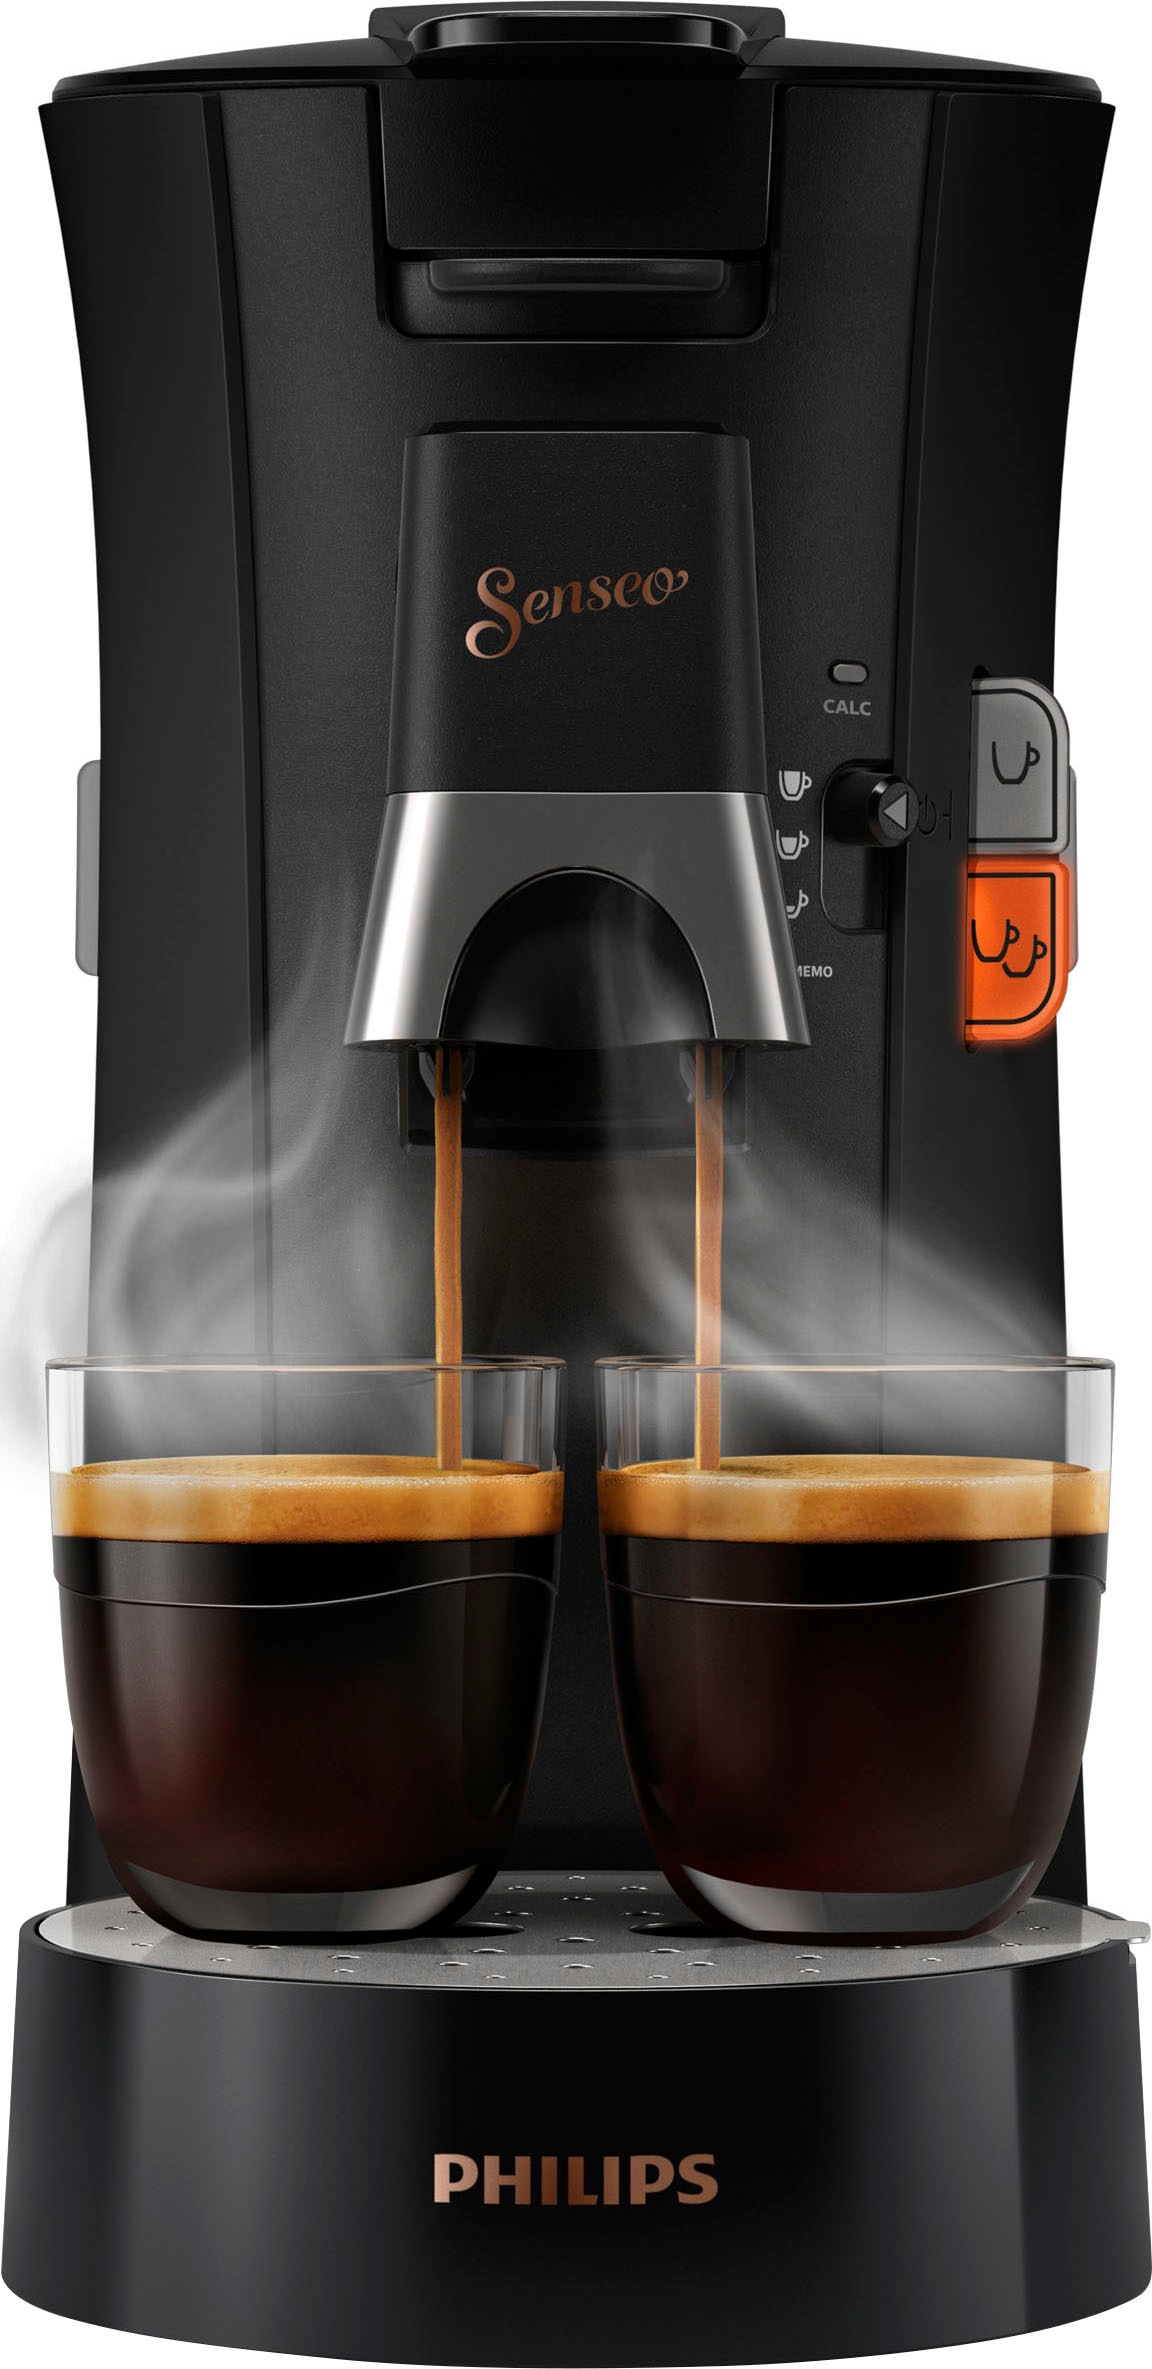 Philips Senseo Kaffeepadmaschine »Select CSA240/60«, aus 21% recyceltem Plastik, mit 3 Kaffeespezialitäten, metal schwarz